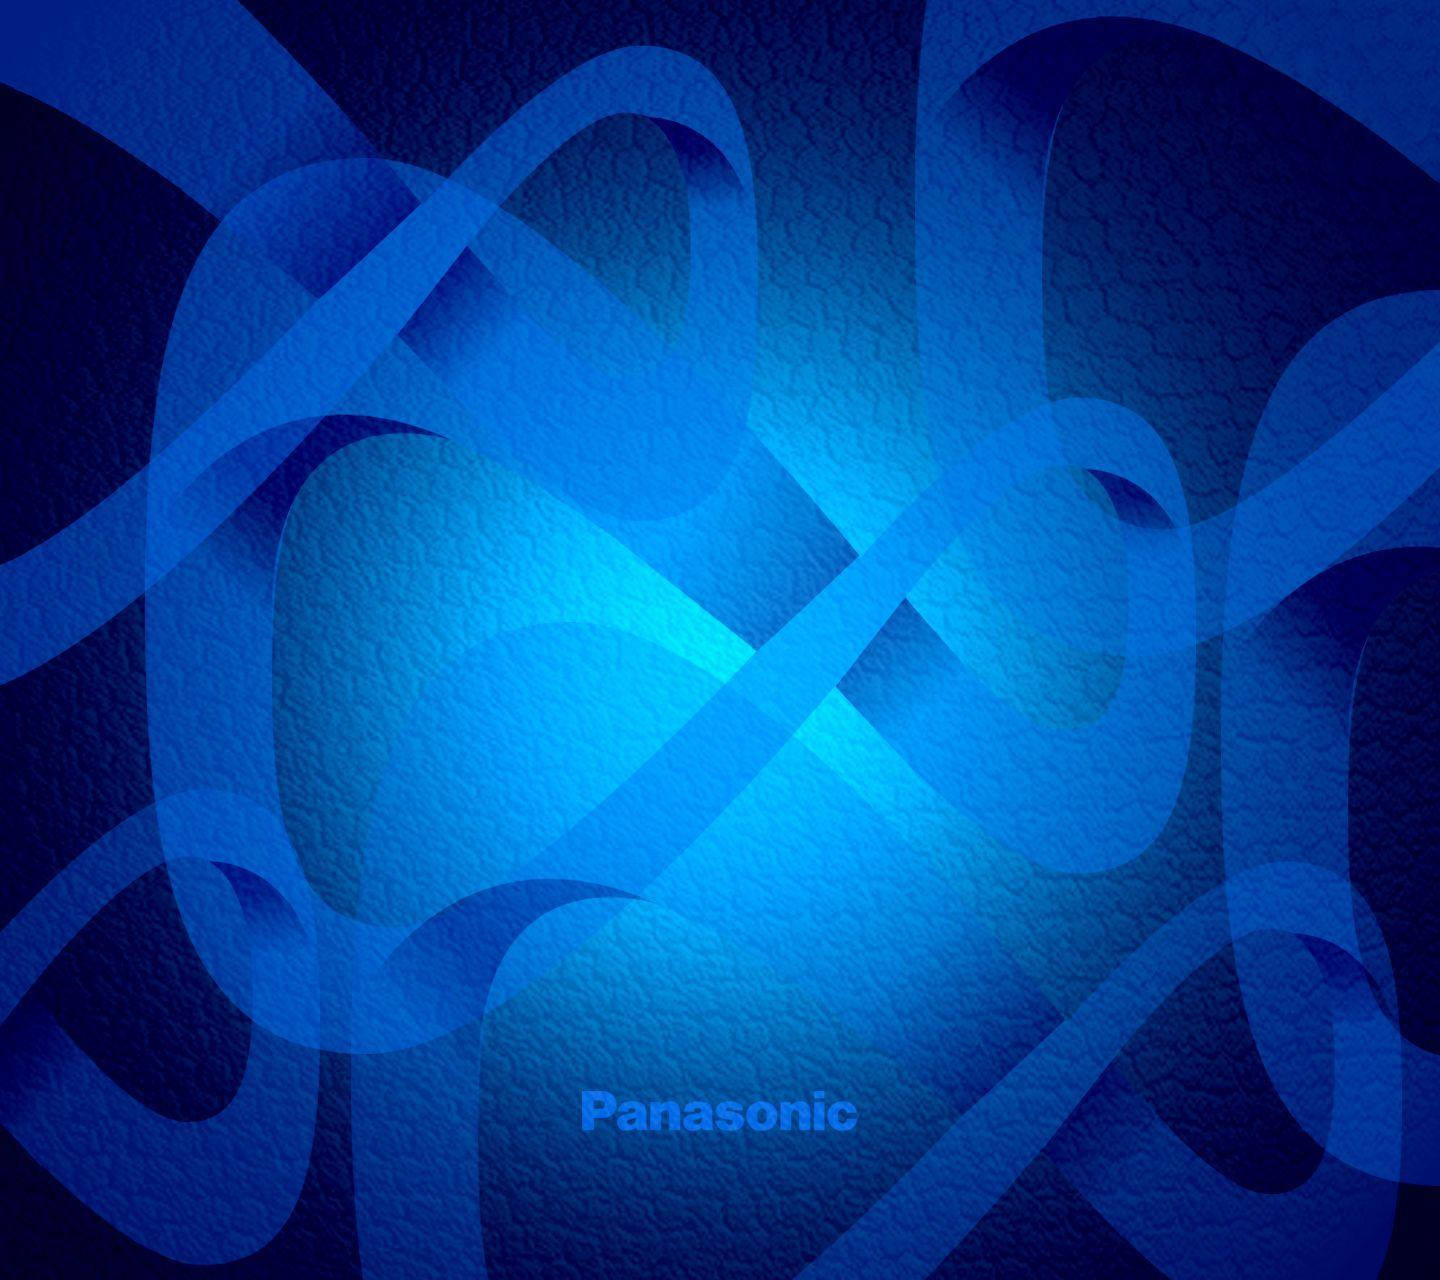 Panasonic Blue Abstract Background